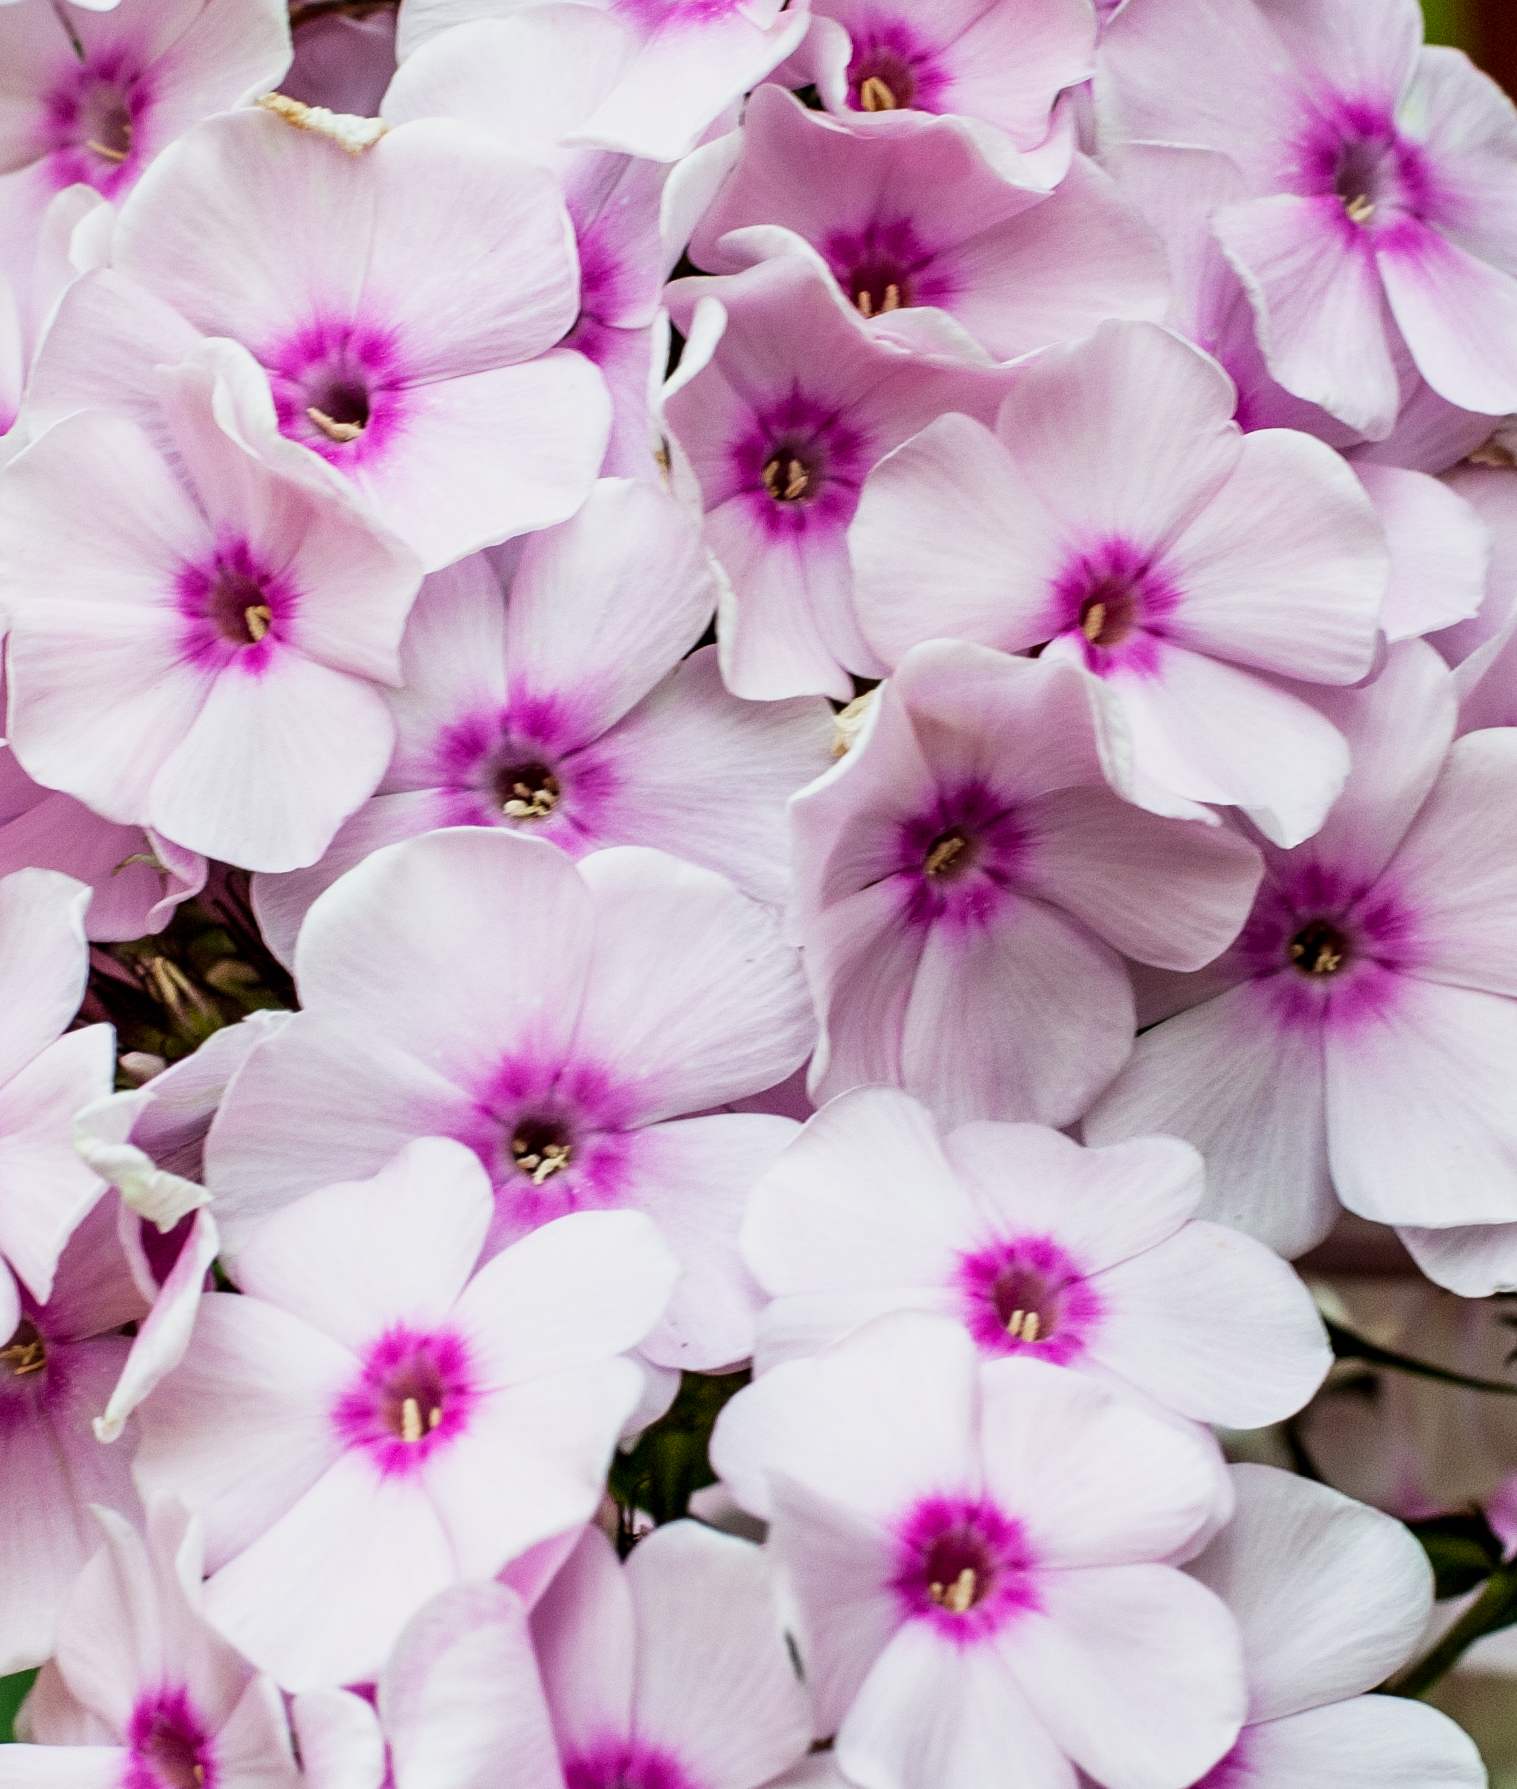 pale purple flowers with darker purple-pink centers